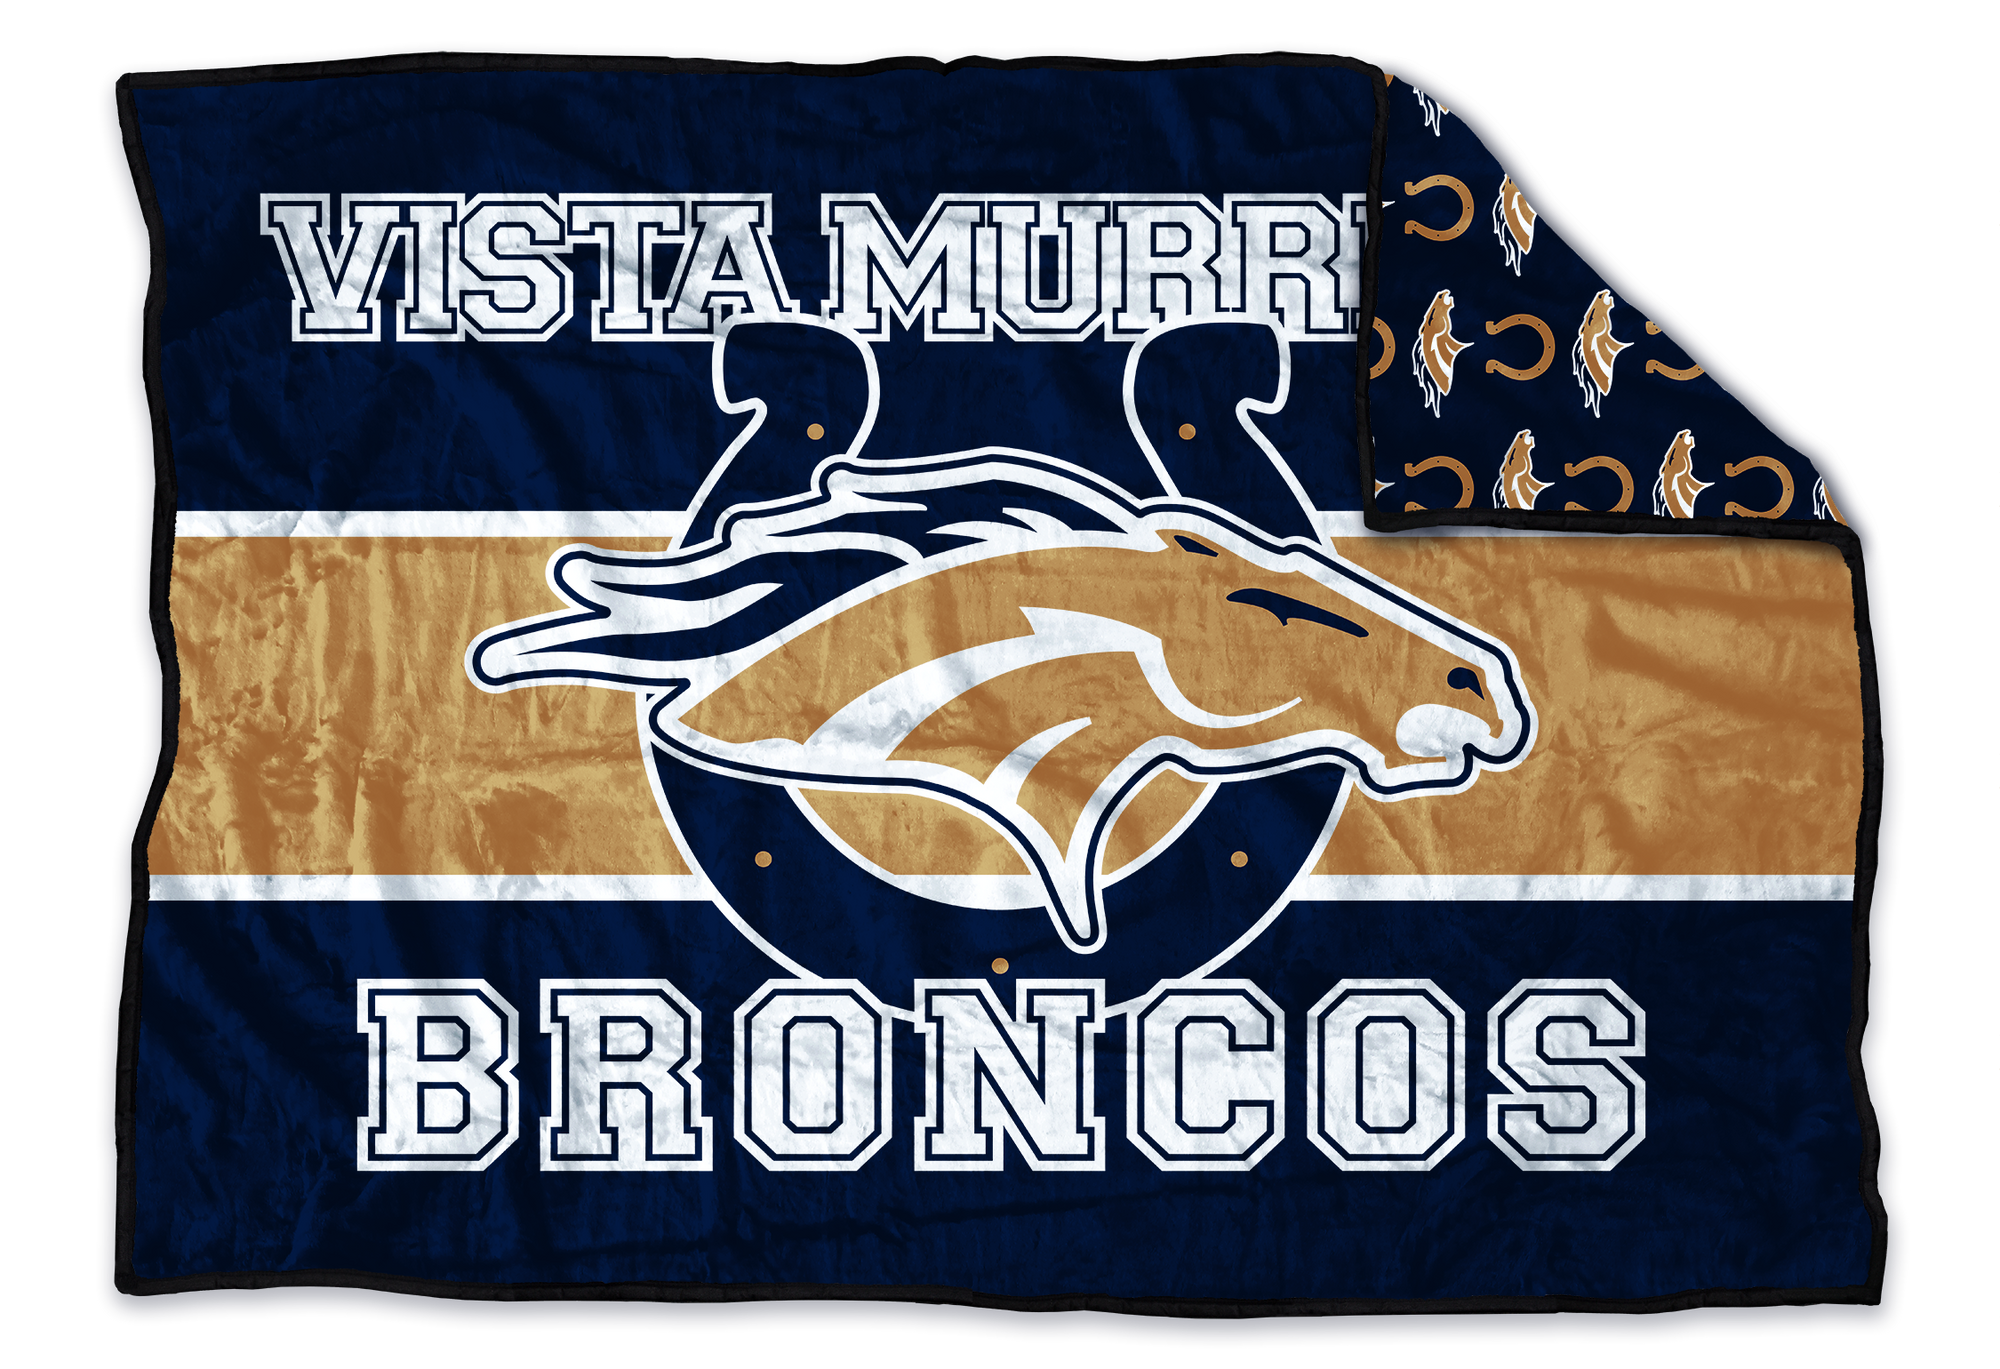 Vista Murrieta Broncos